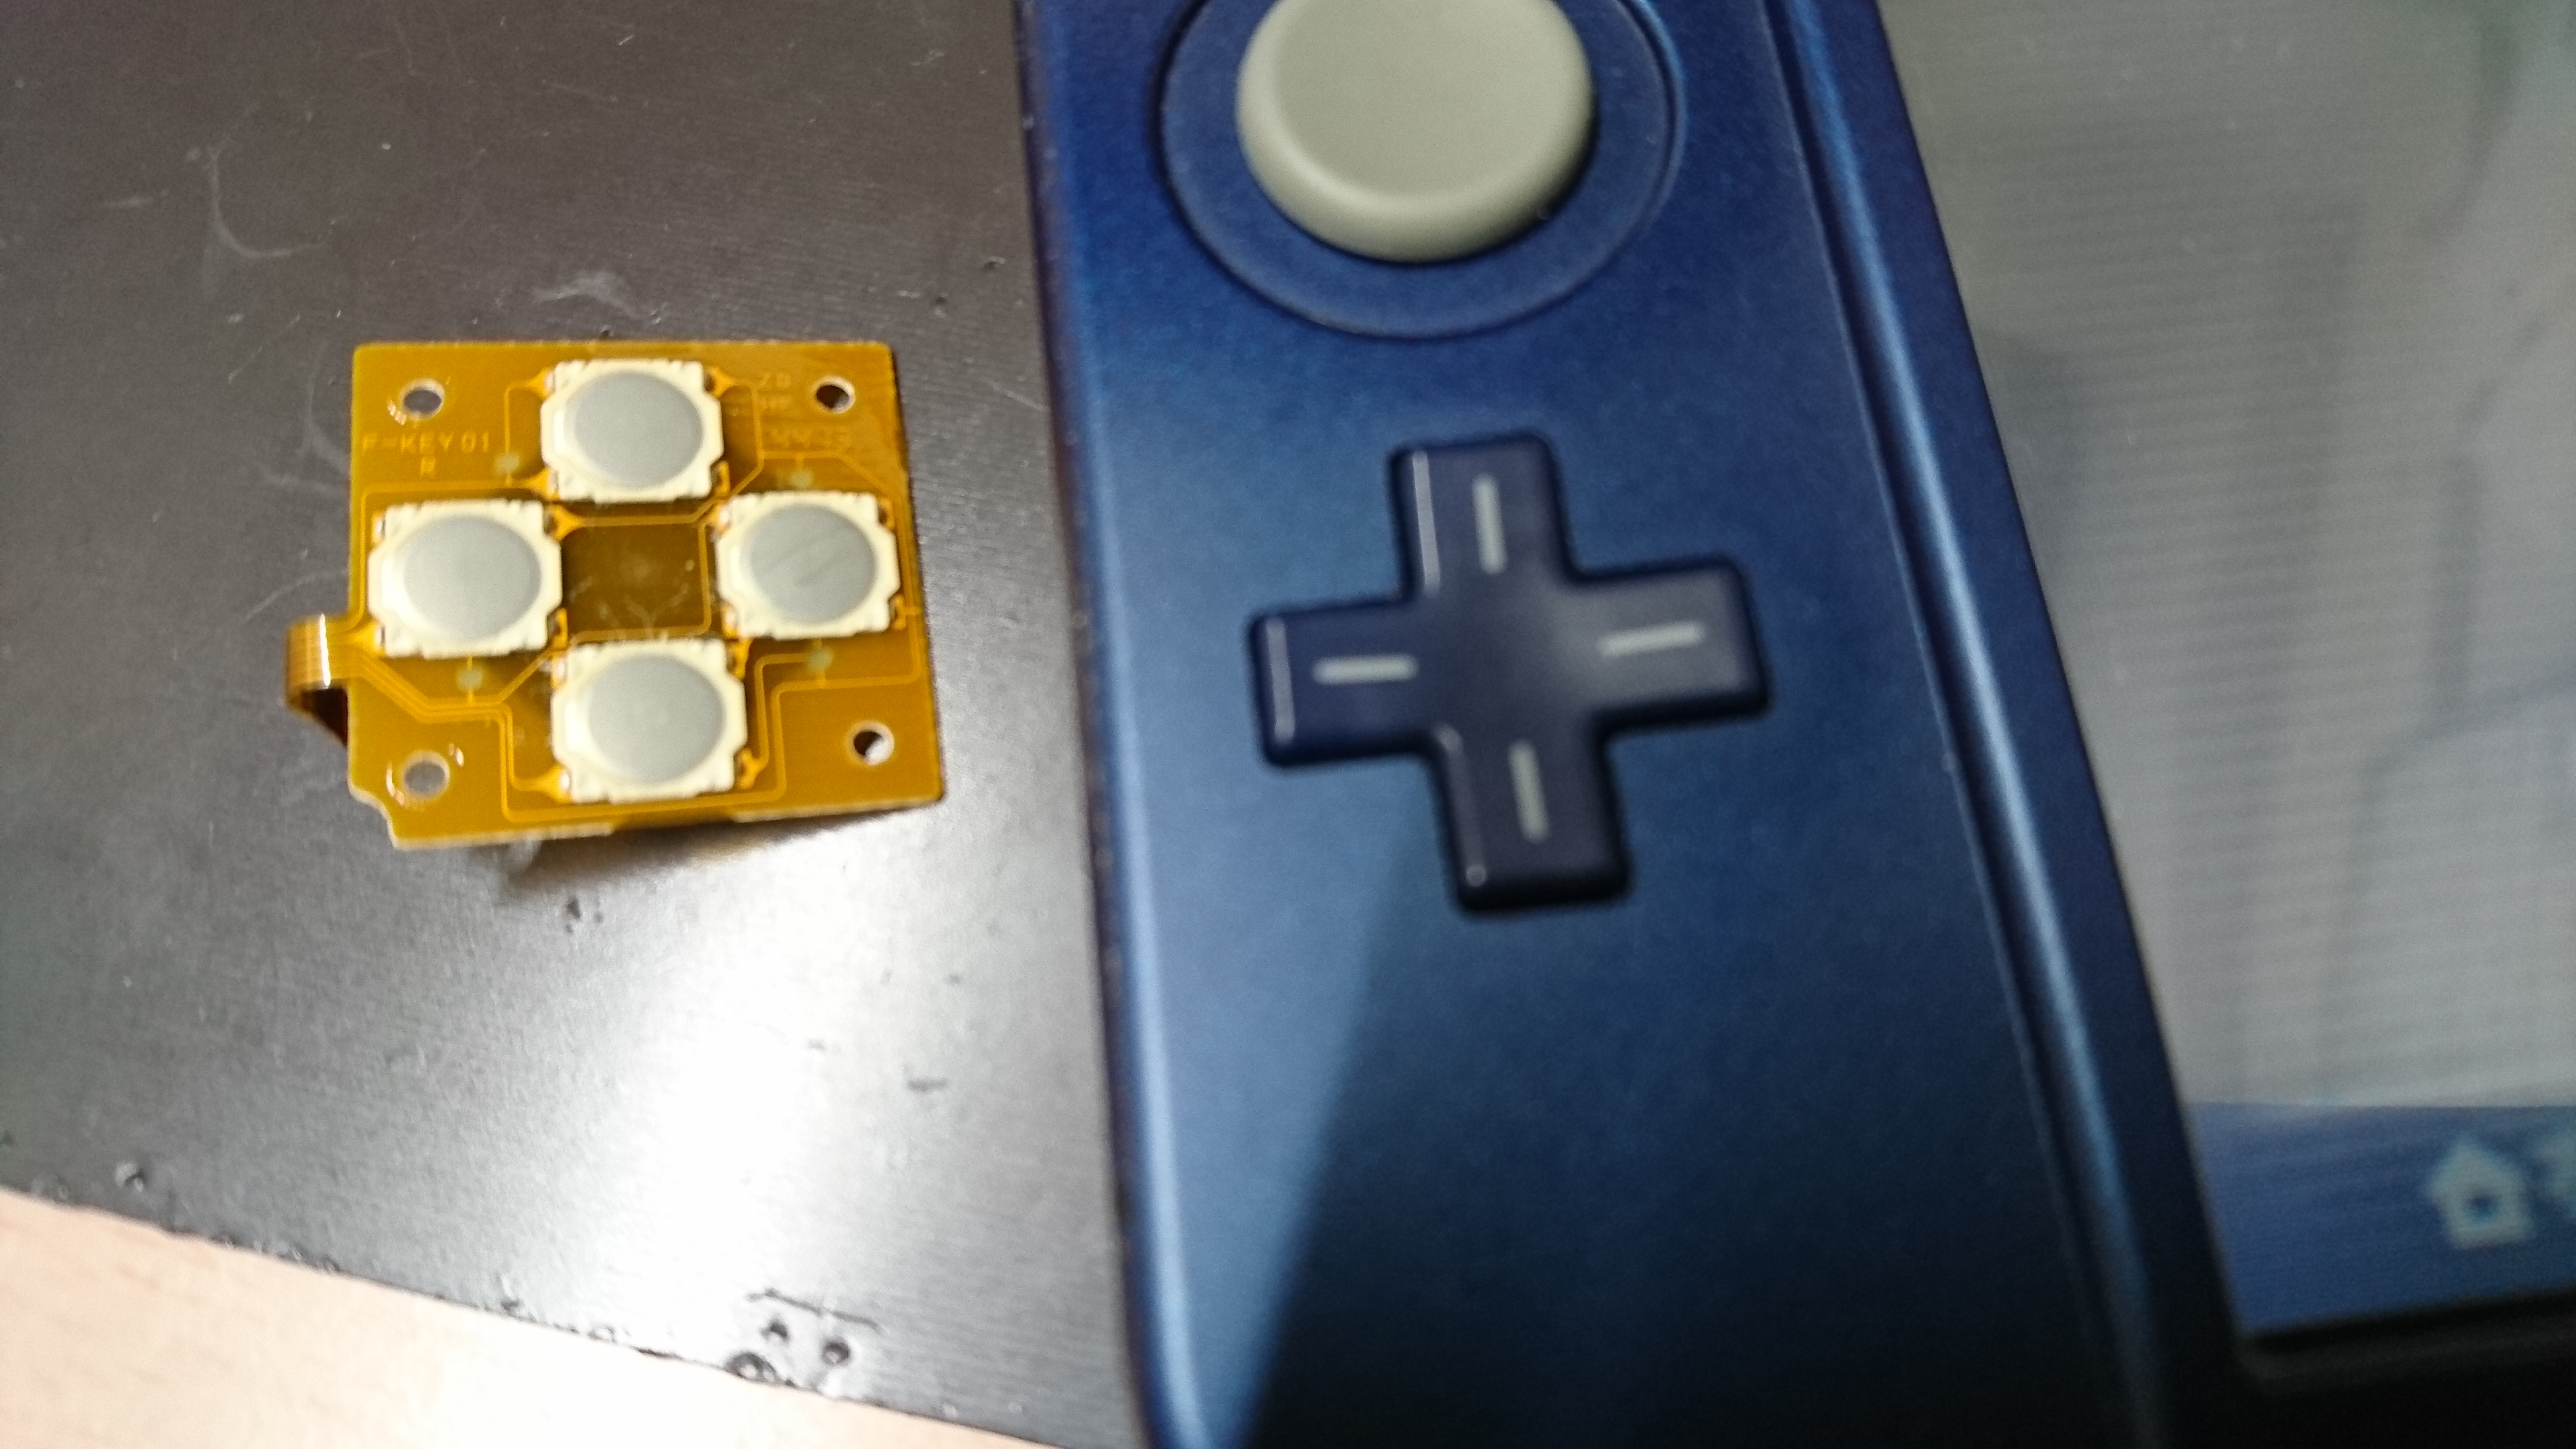 New３dsllの十字キー交換修理 Switch Nintendo3ds Psp 修理のゲームホスピタル Switch Nintendo3ds ニンテンドーds Psp 修理